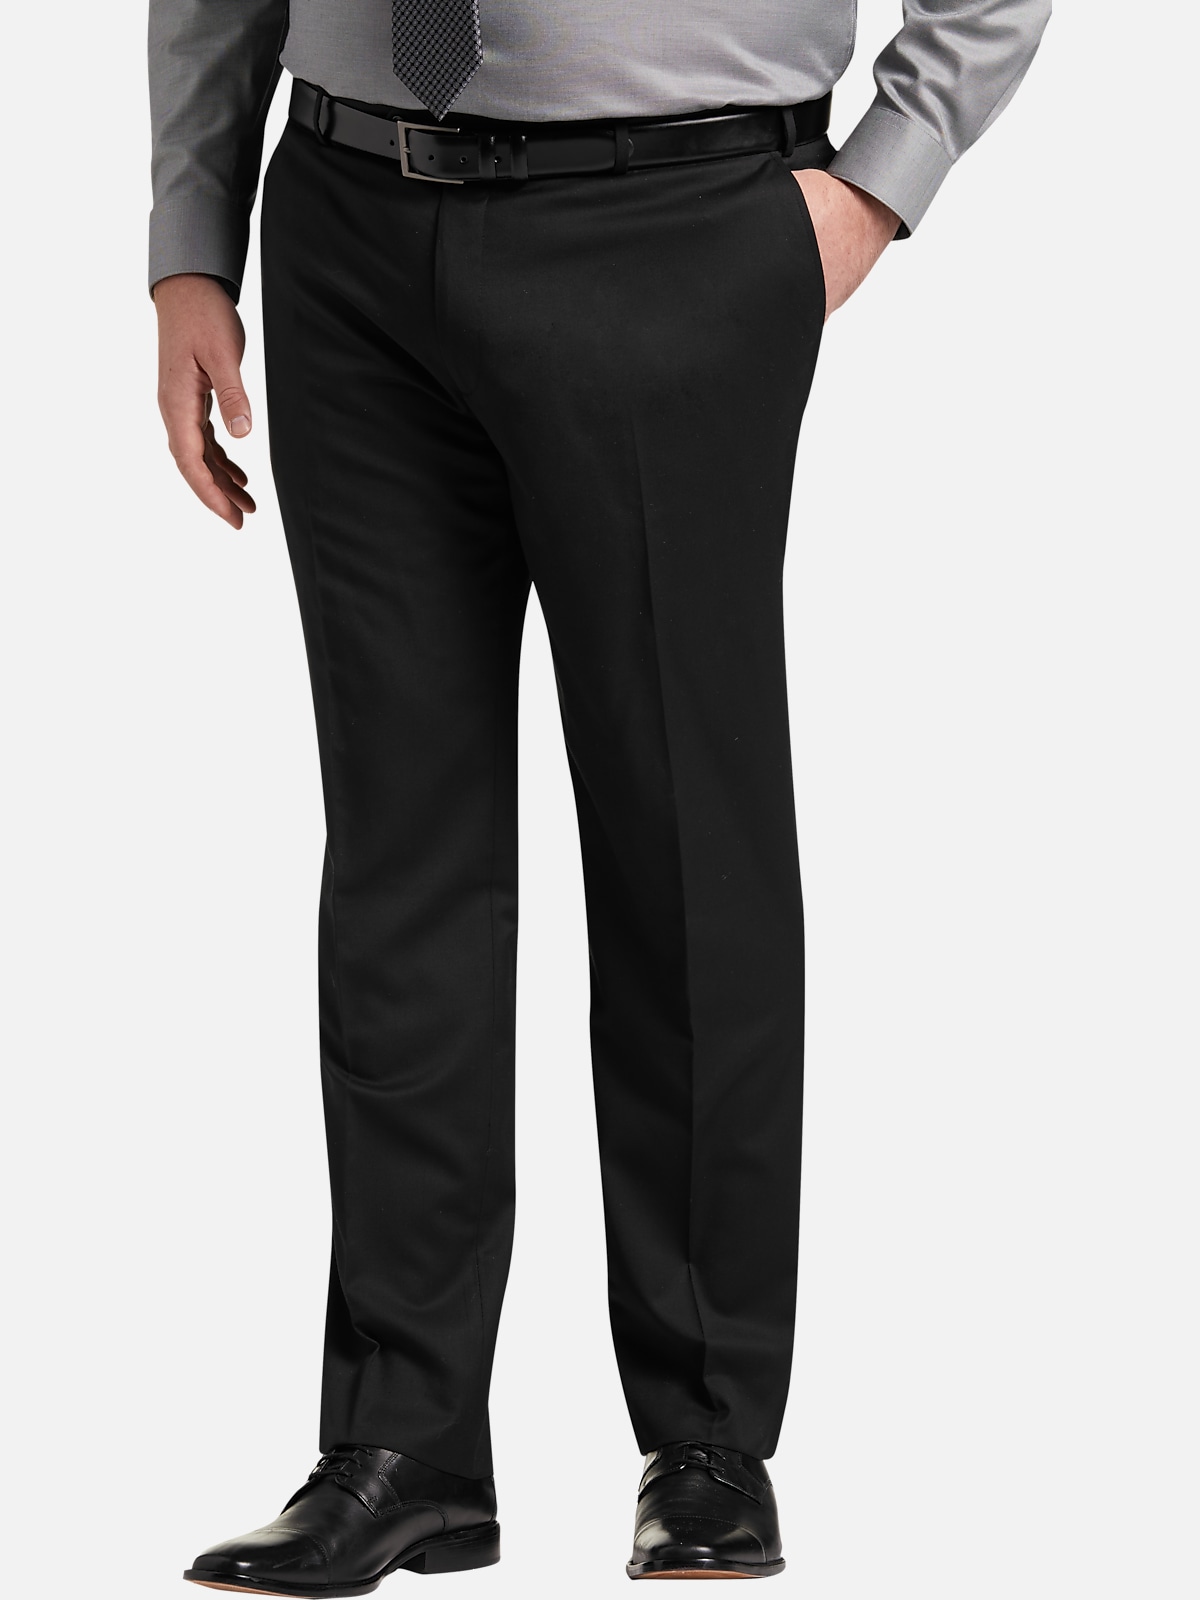 JOE Joseph Abboud Executive Fit Suit Separate Pants | All Clearance $39 ...